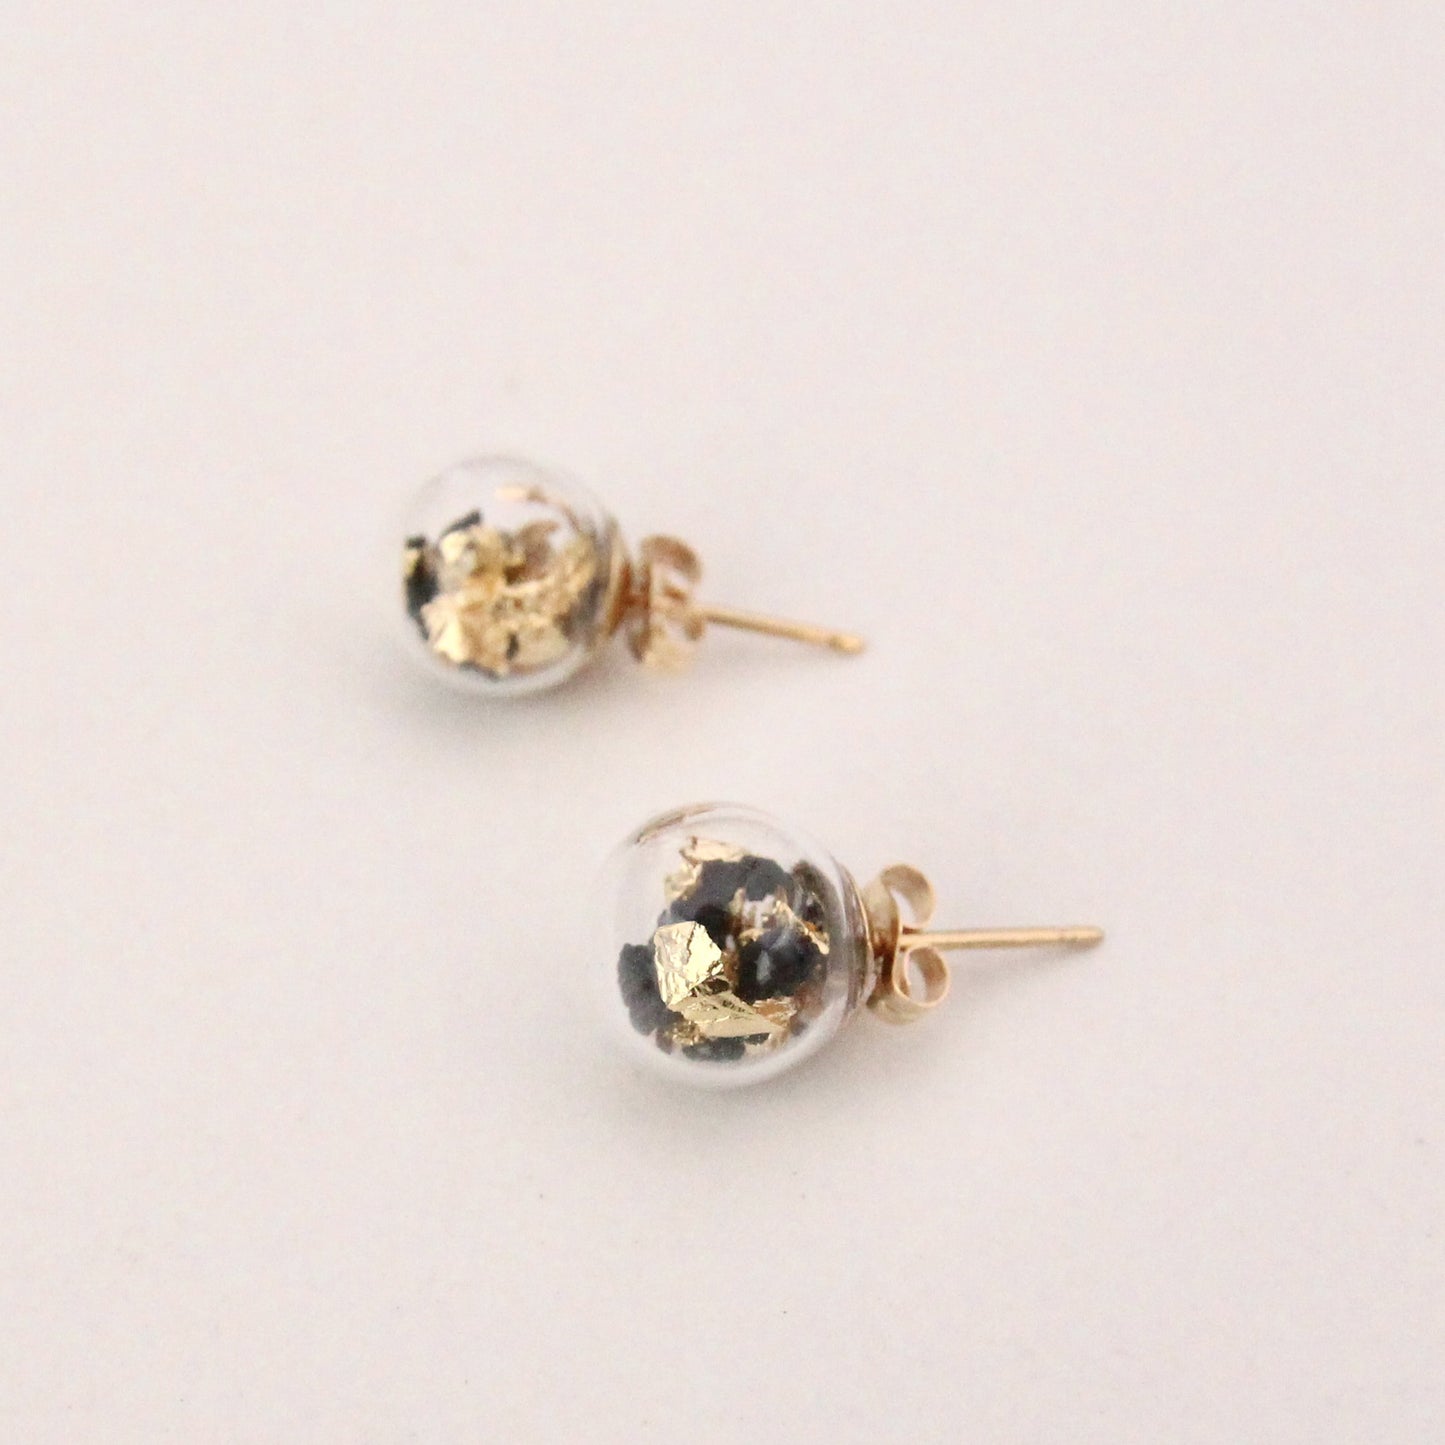 Glass Sphere Stud Earrings - Small - Black